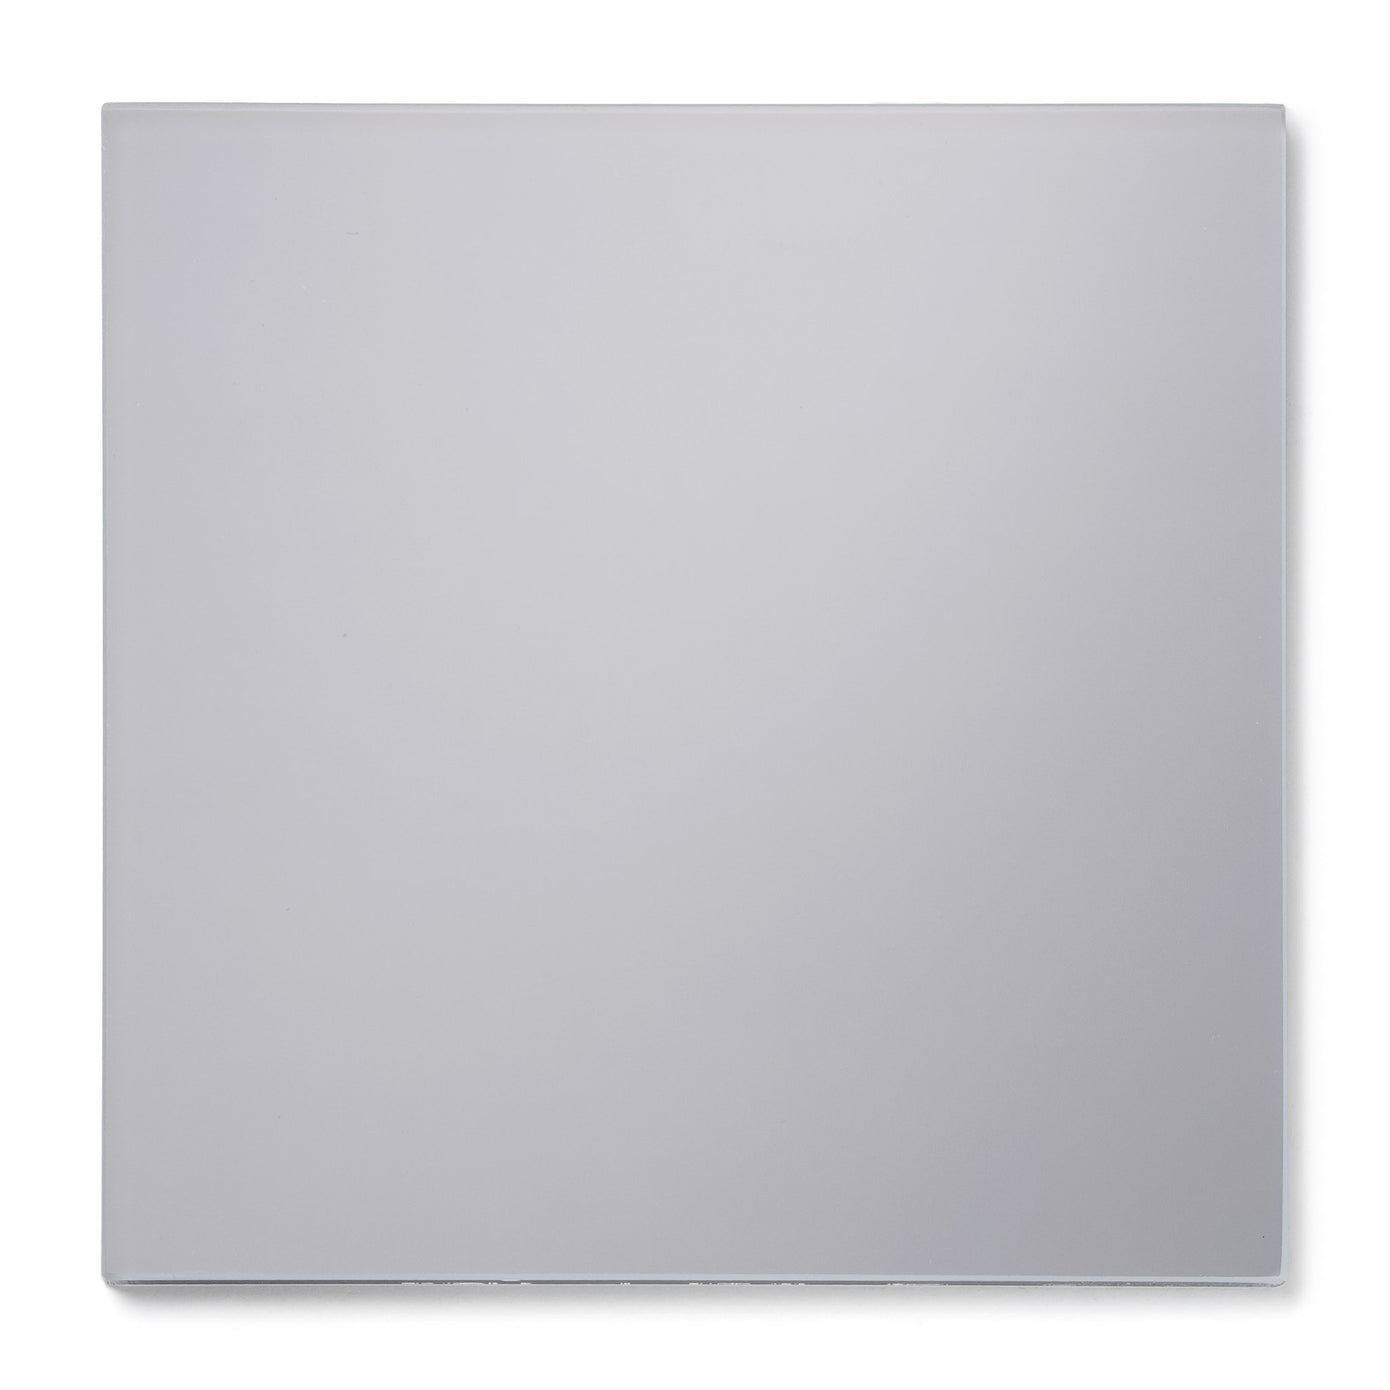 12 x 24 1/8 Acrylic Mirror Sheet - 3mm Platic Silver Safety